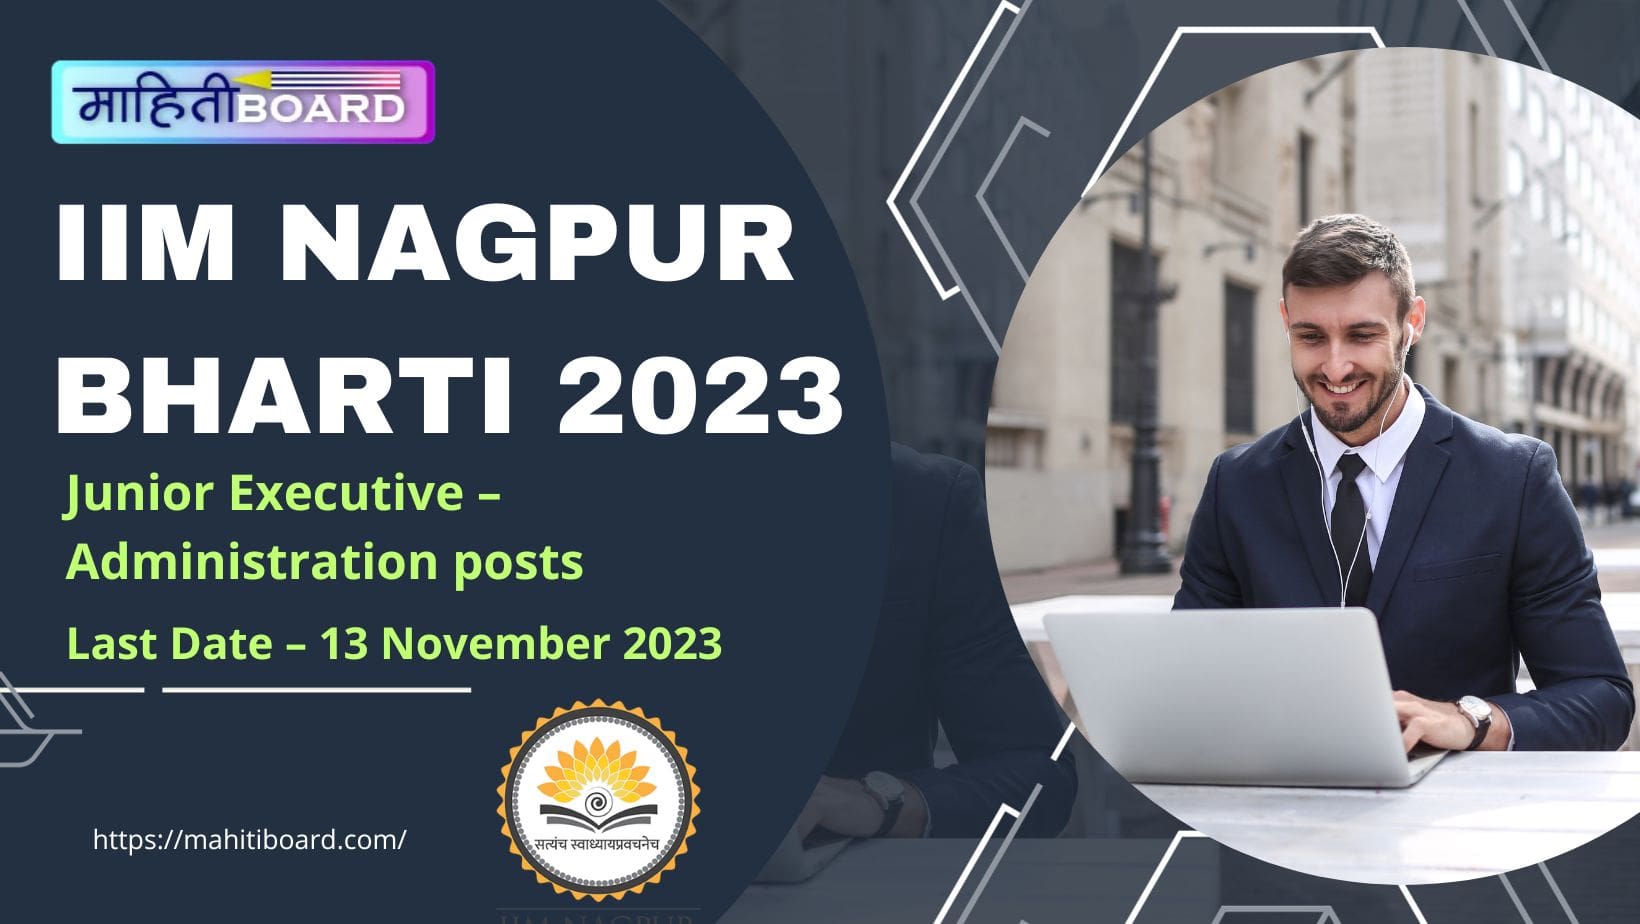 IIM Nagpur Bharti 2023